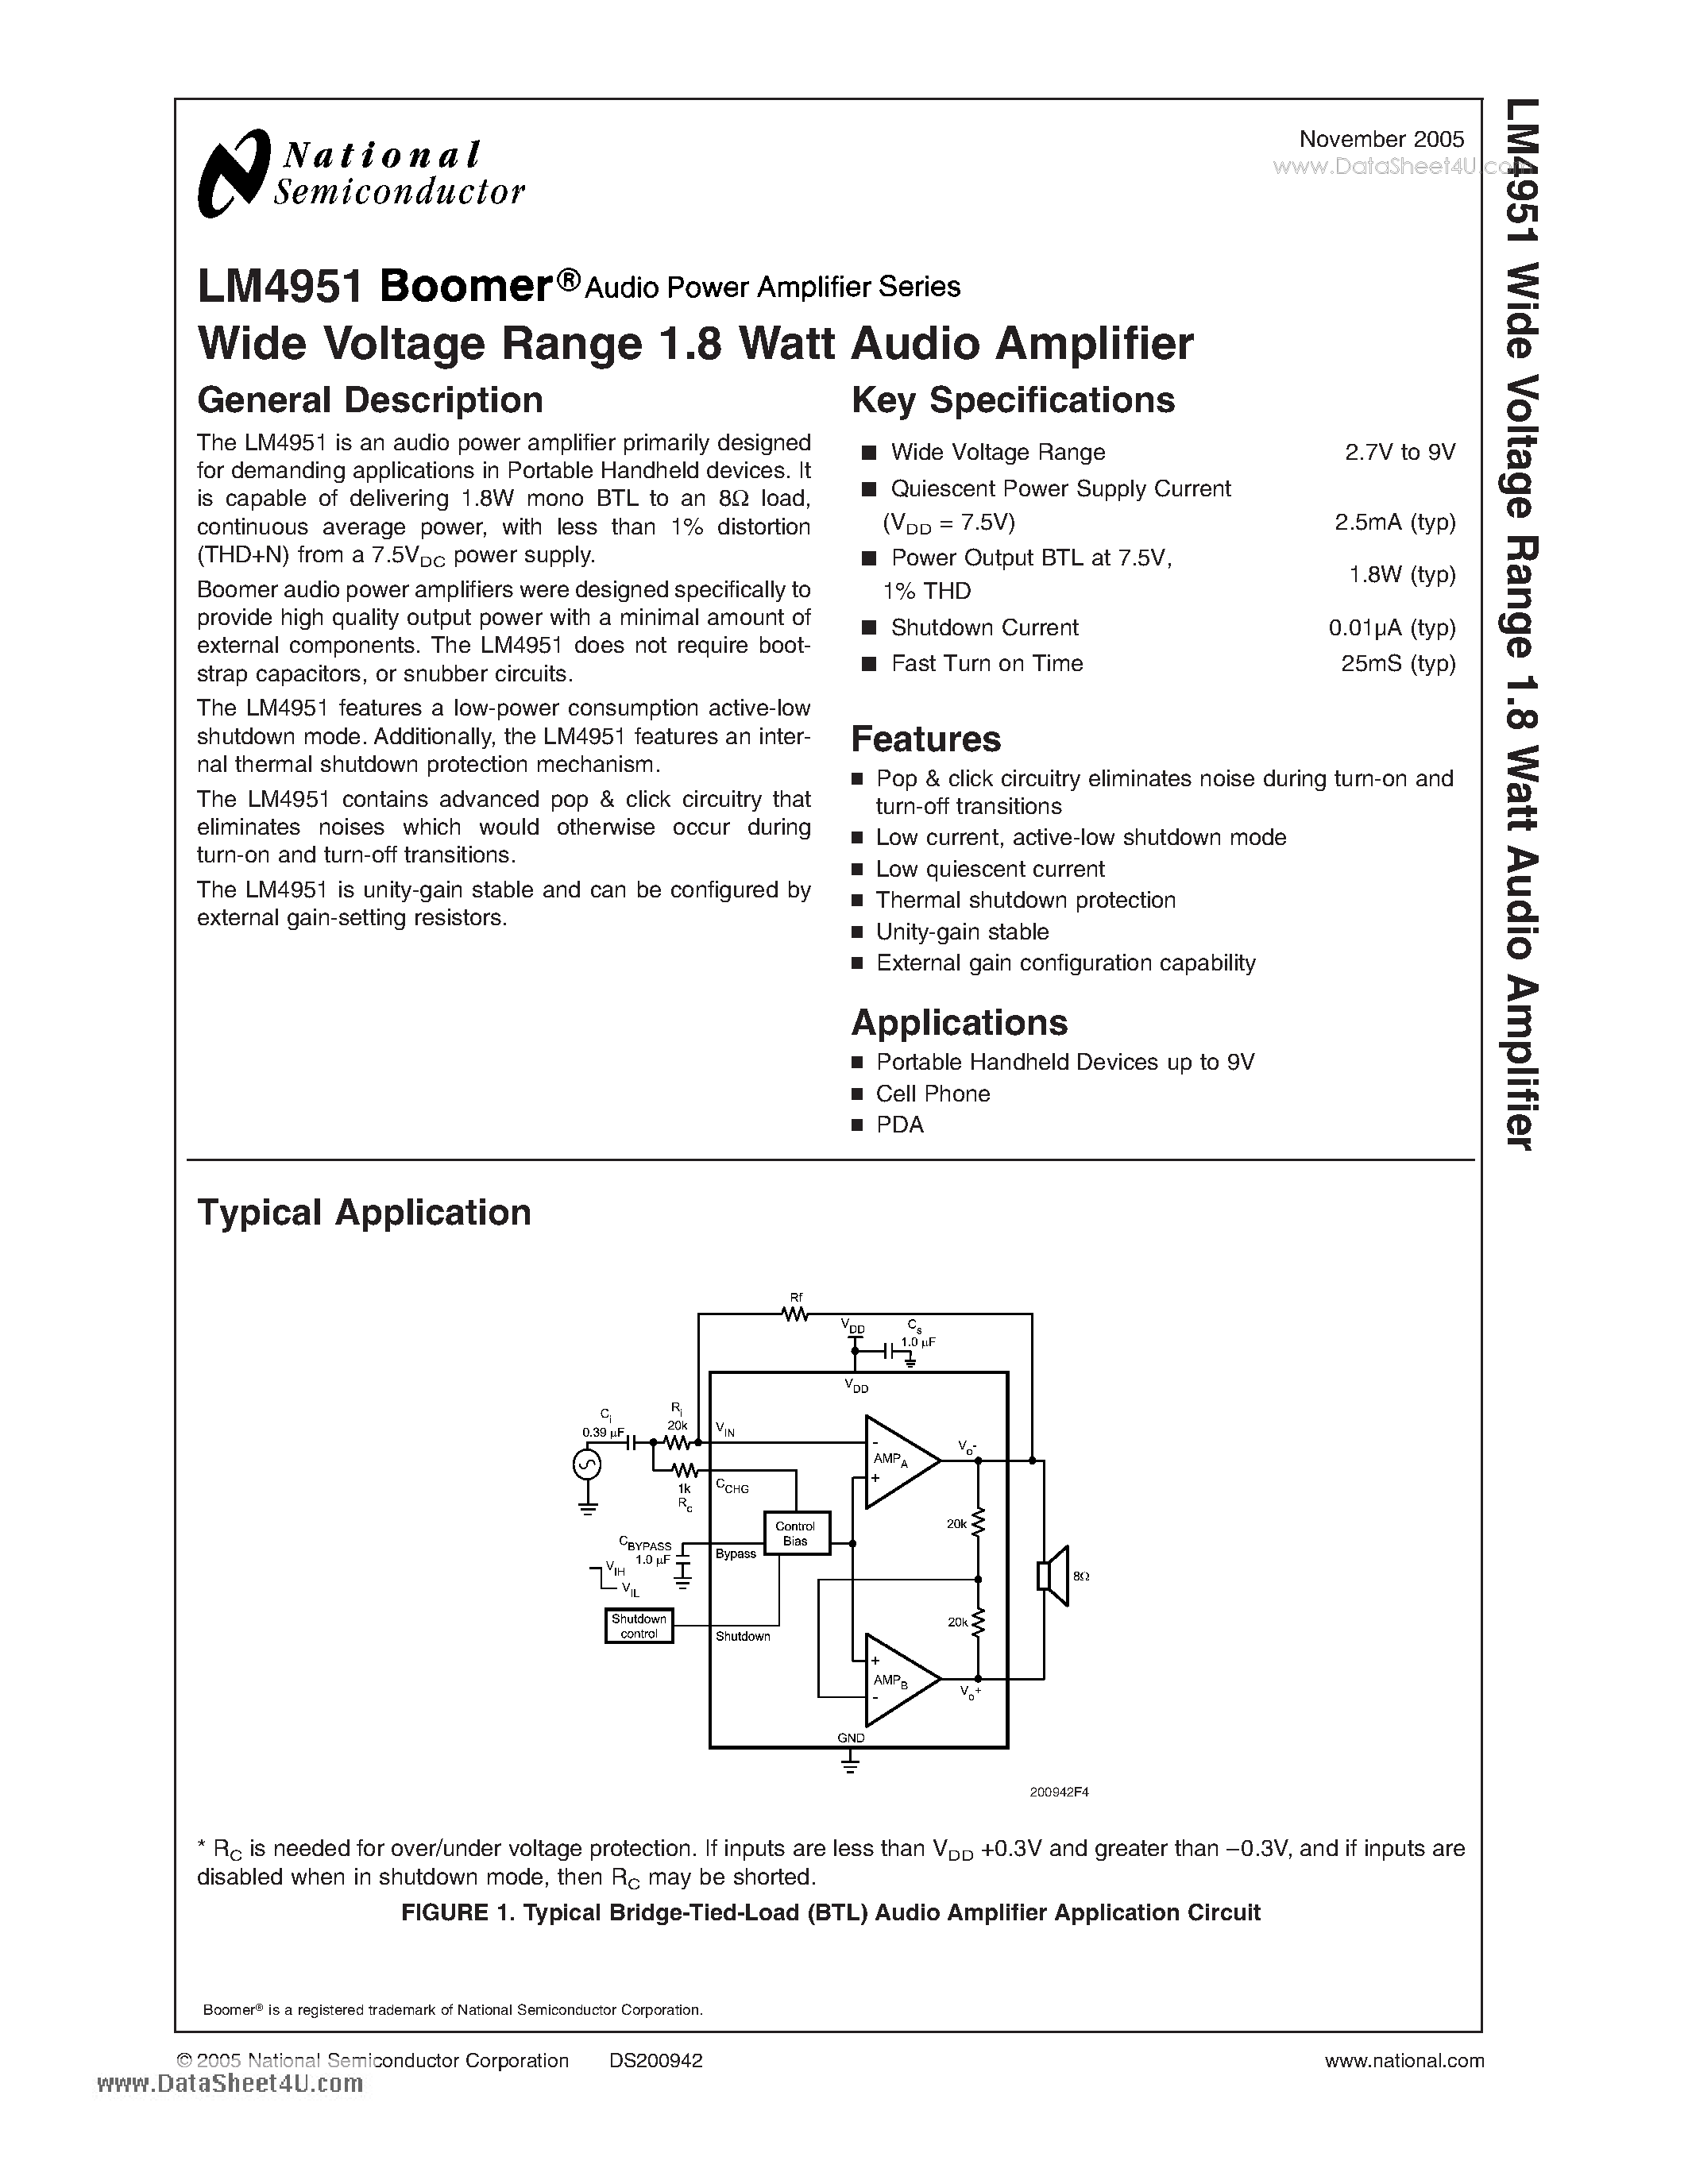 Даташит LM4951 - Wide Voltage Range 1.8 Watt Audio Amplifier страница 1